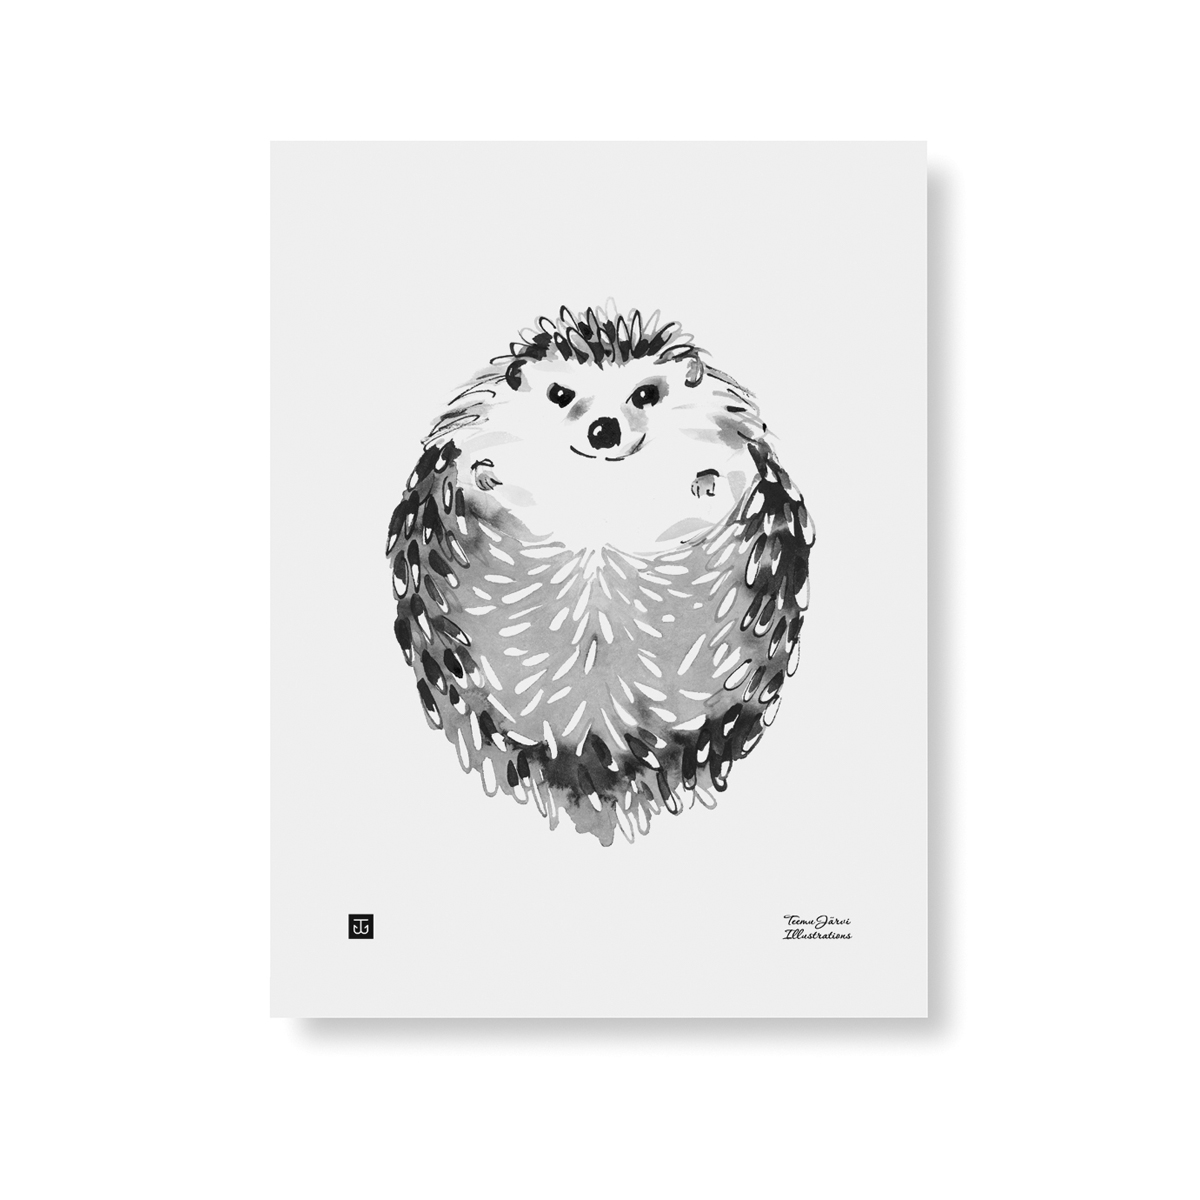 Hedgehog art print